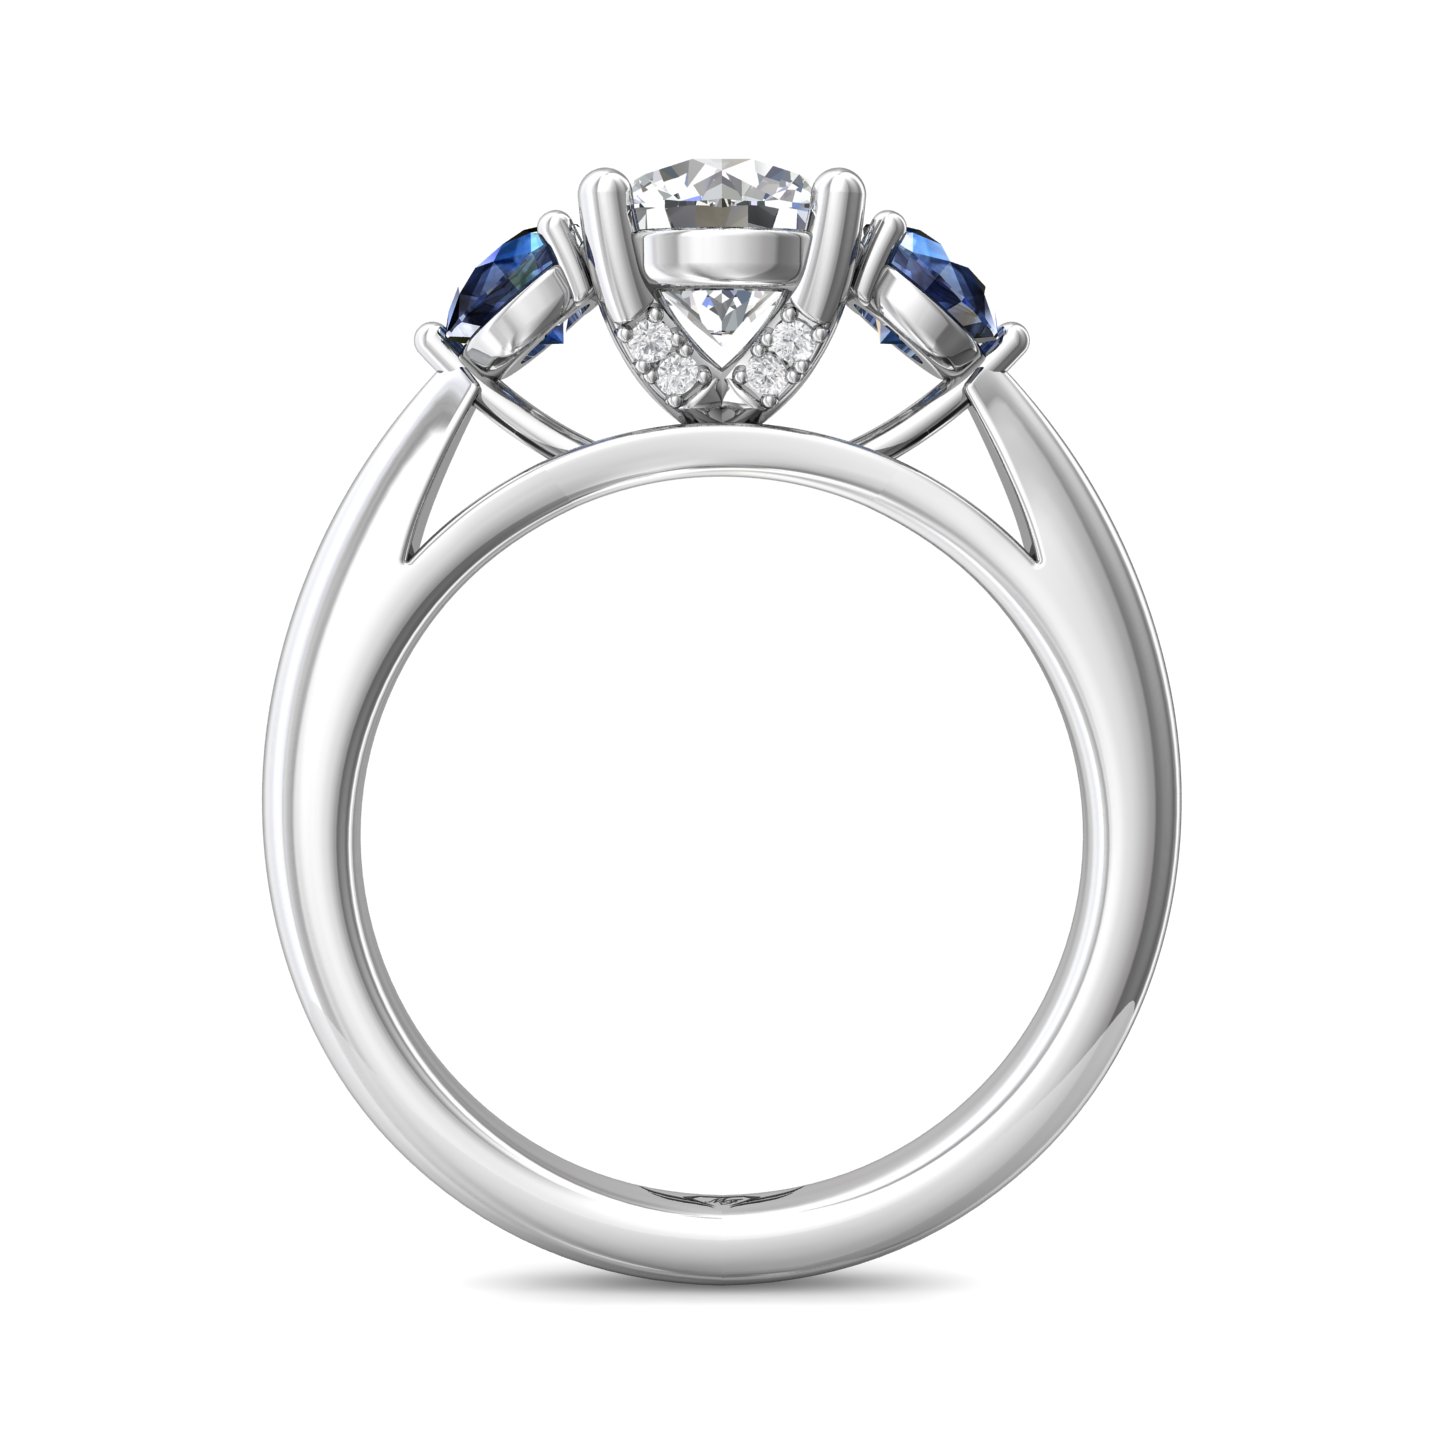 14K White Gold FlyerFit Three Stone Engagement Ring Image 2 Christopher's Fine Jewelry Pawleys Island, SC